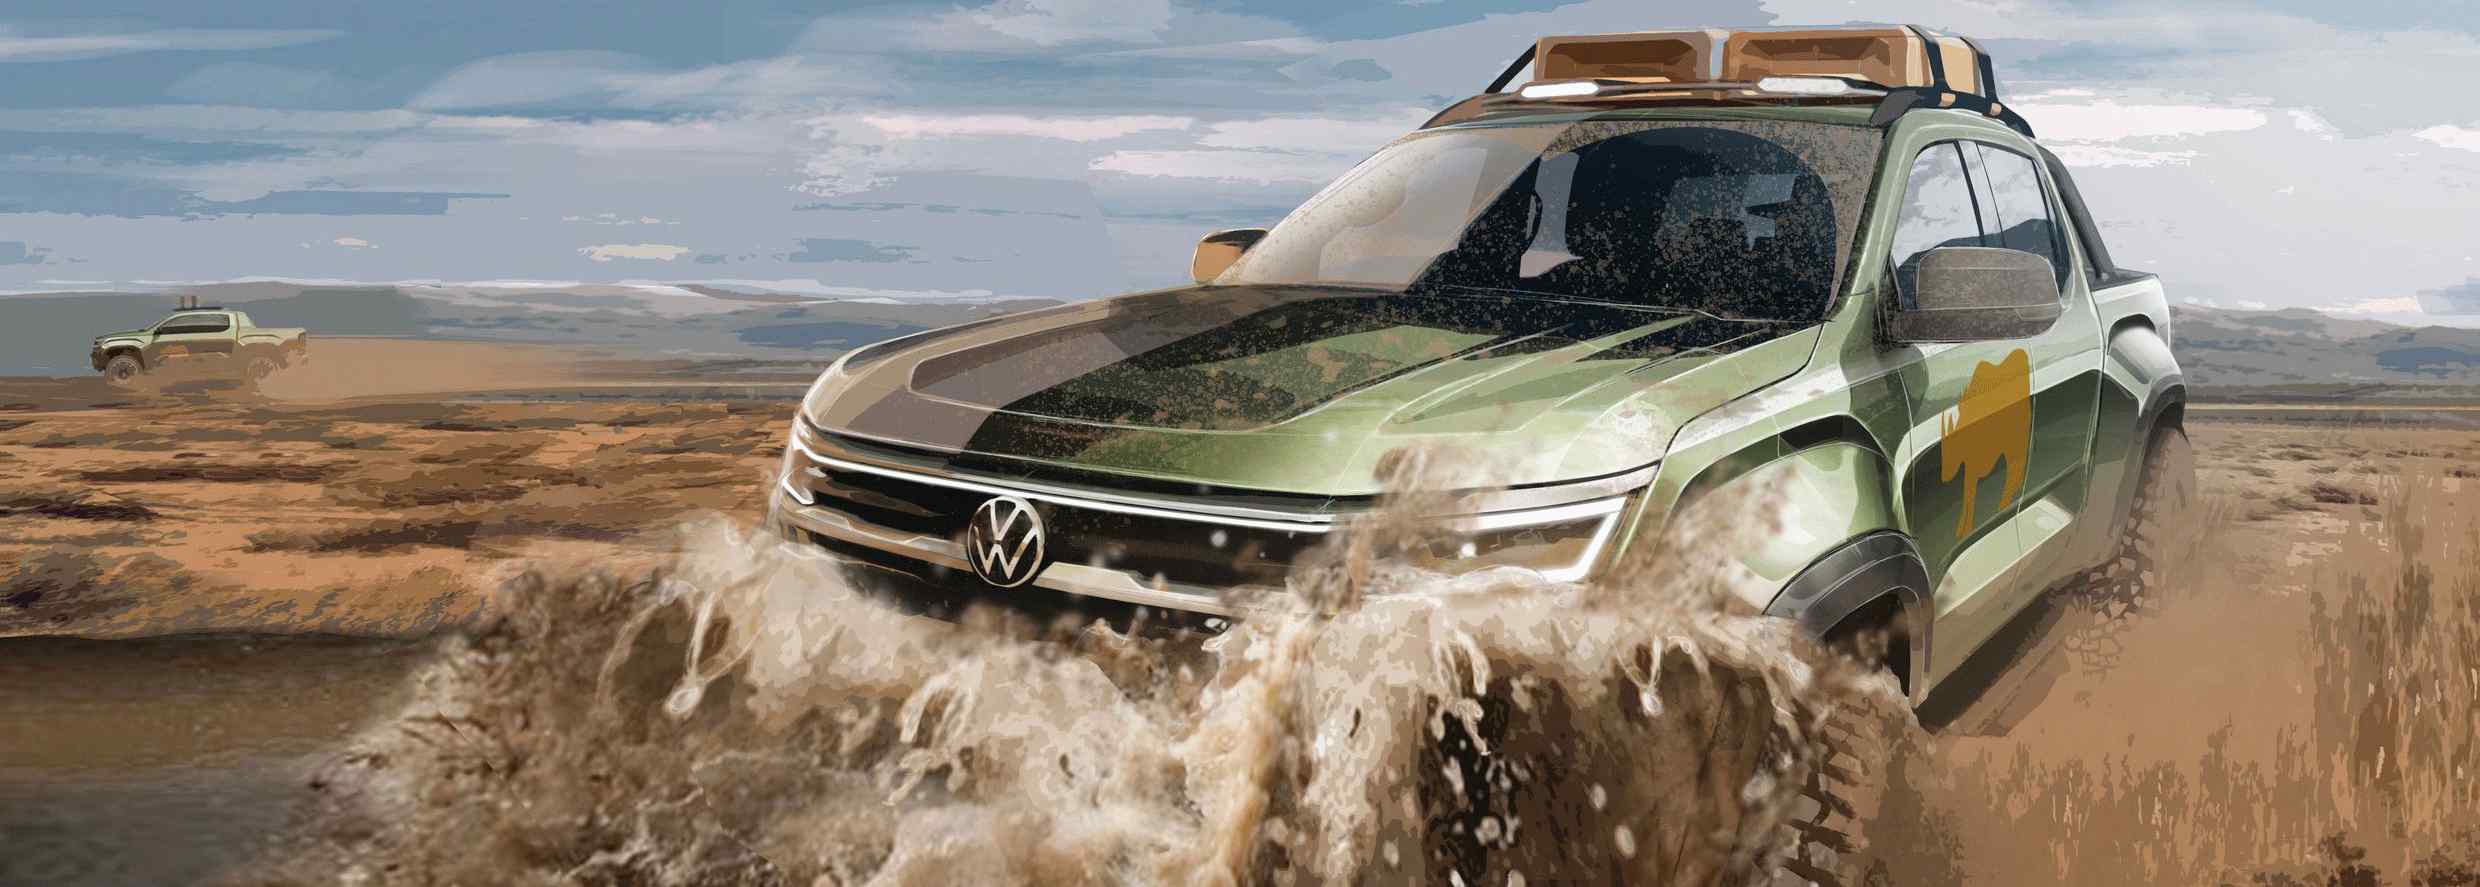 Volkswagen releases teaser images of new Amarok